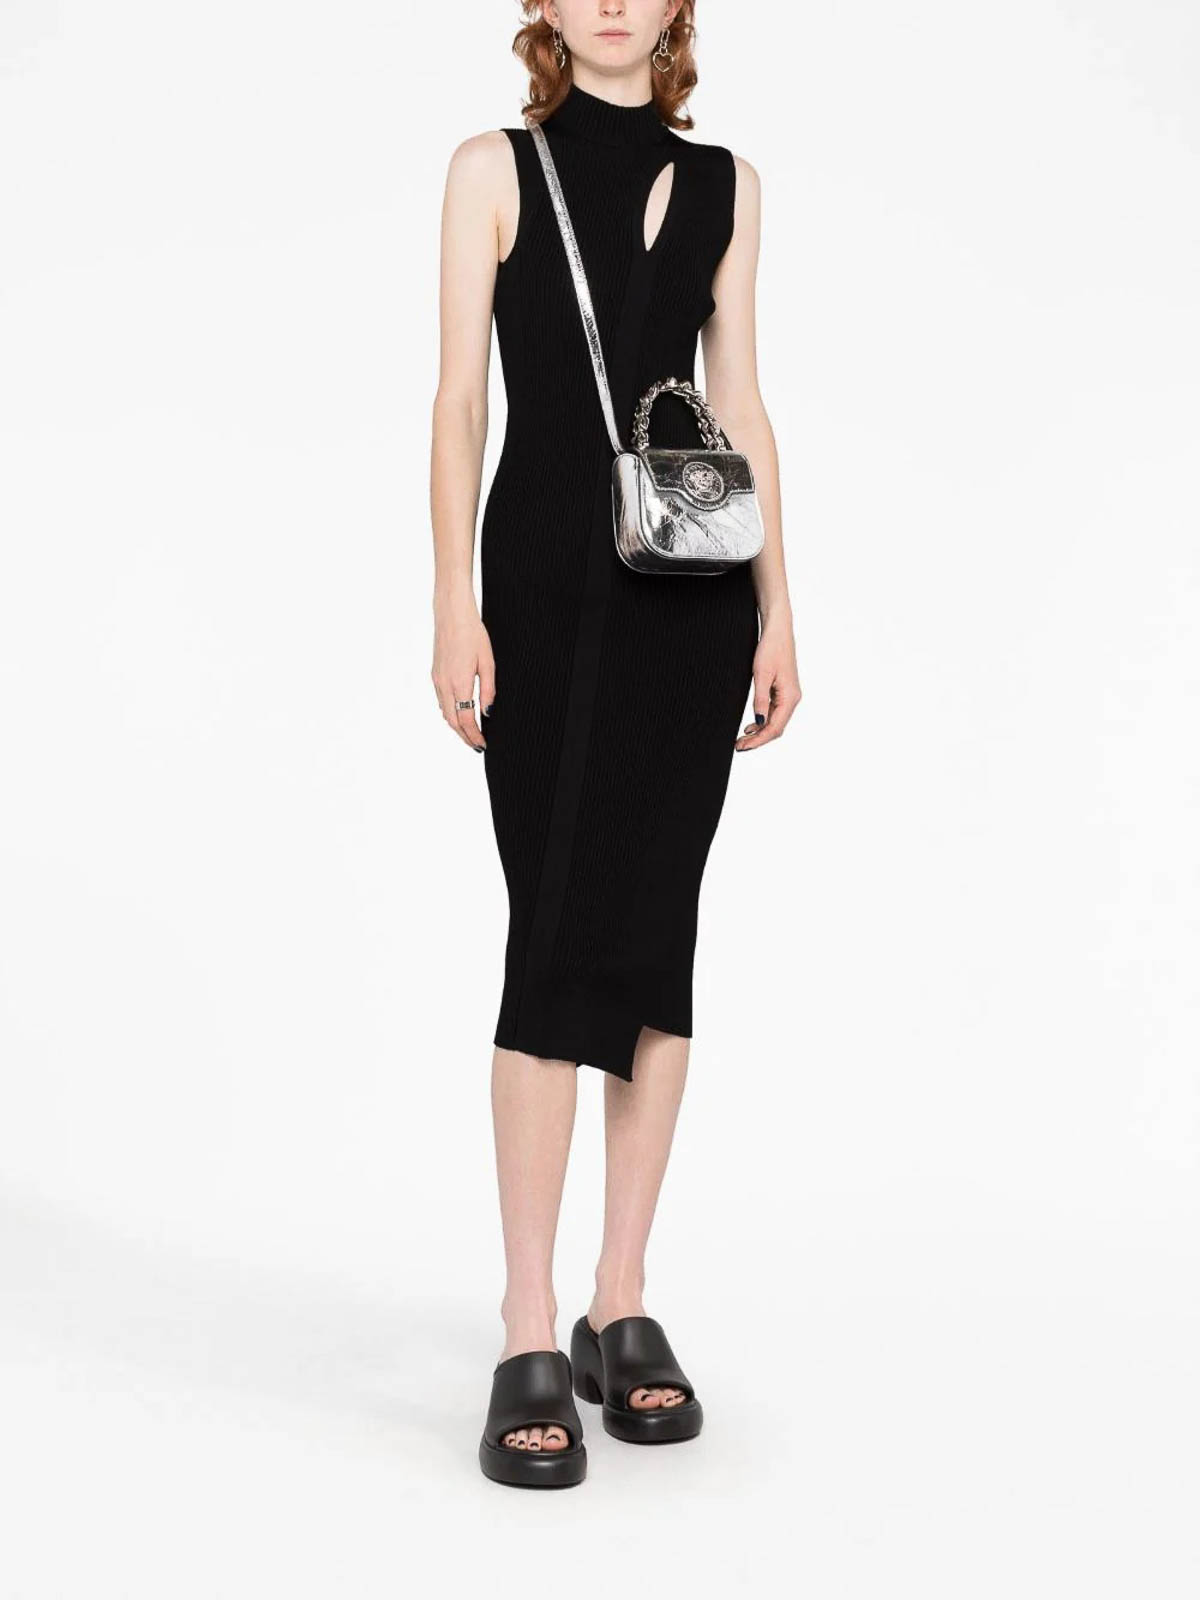 Versace La Medusa Metallic Mini Bag for Women